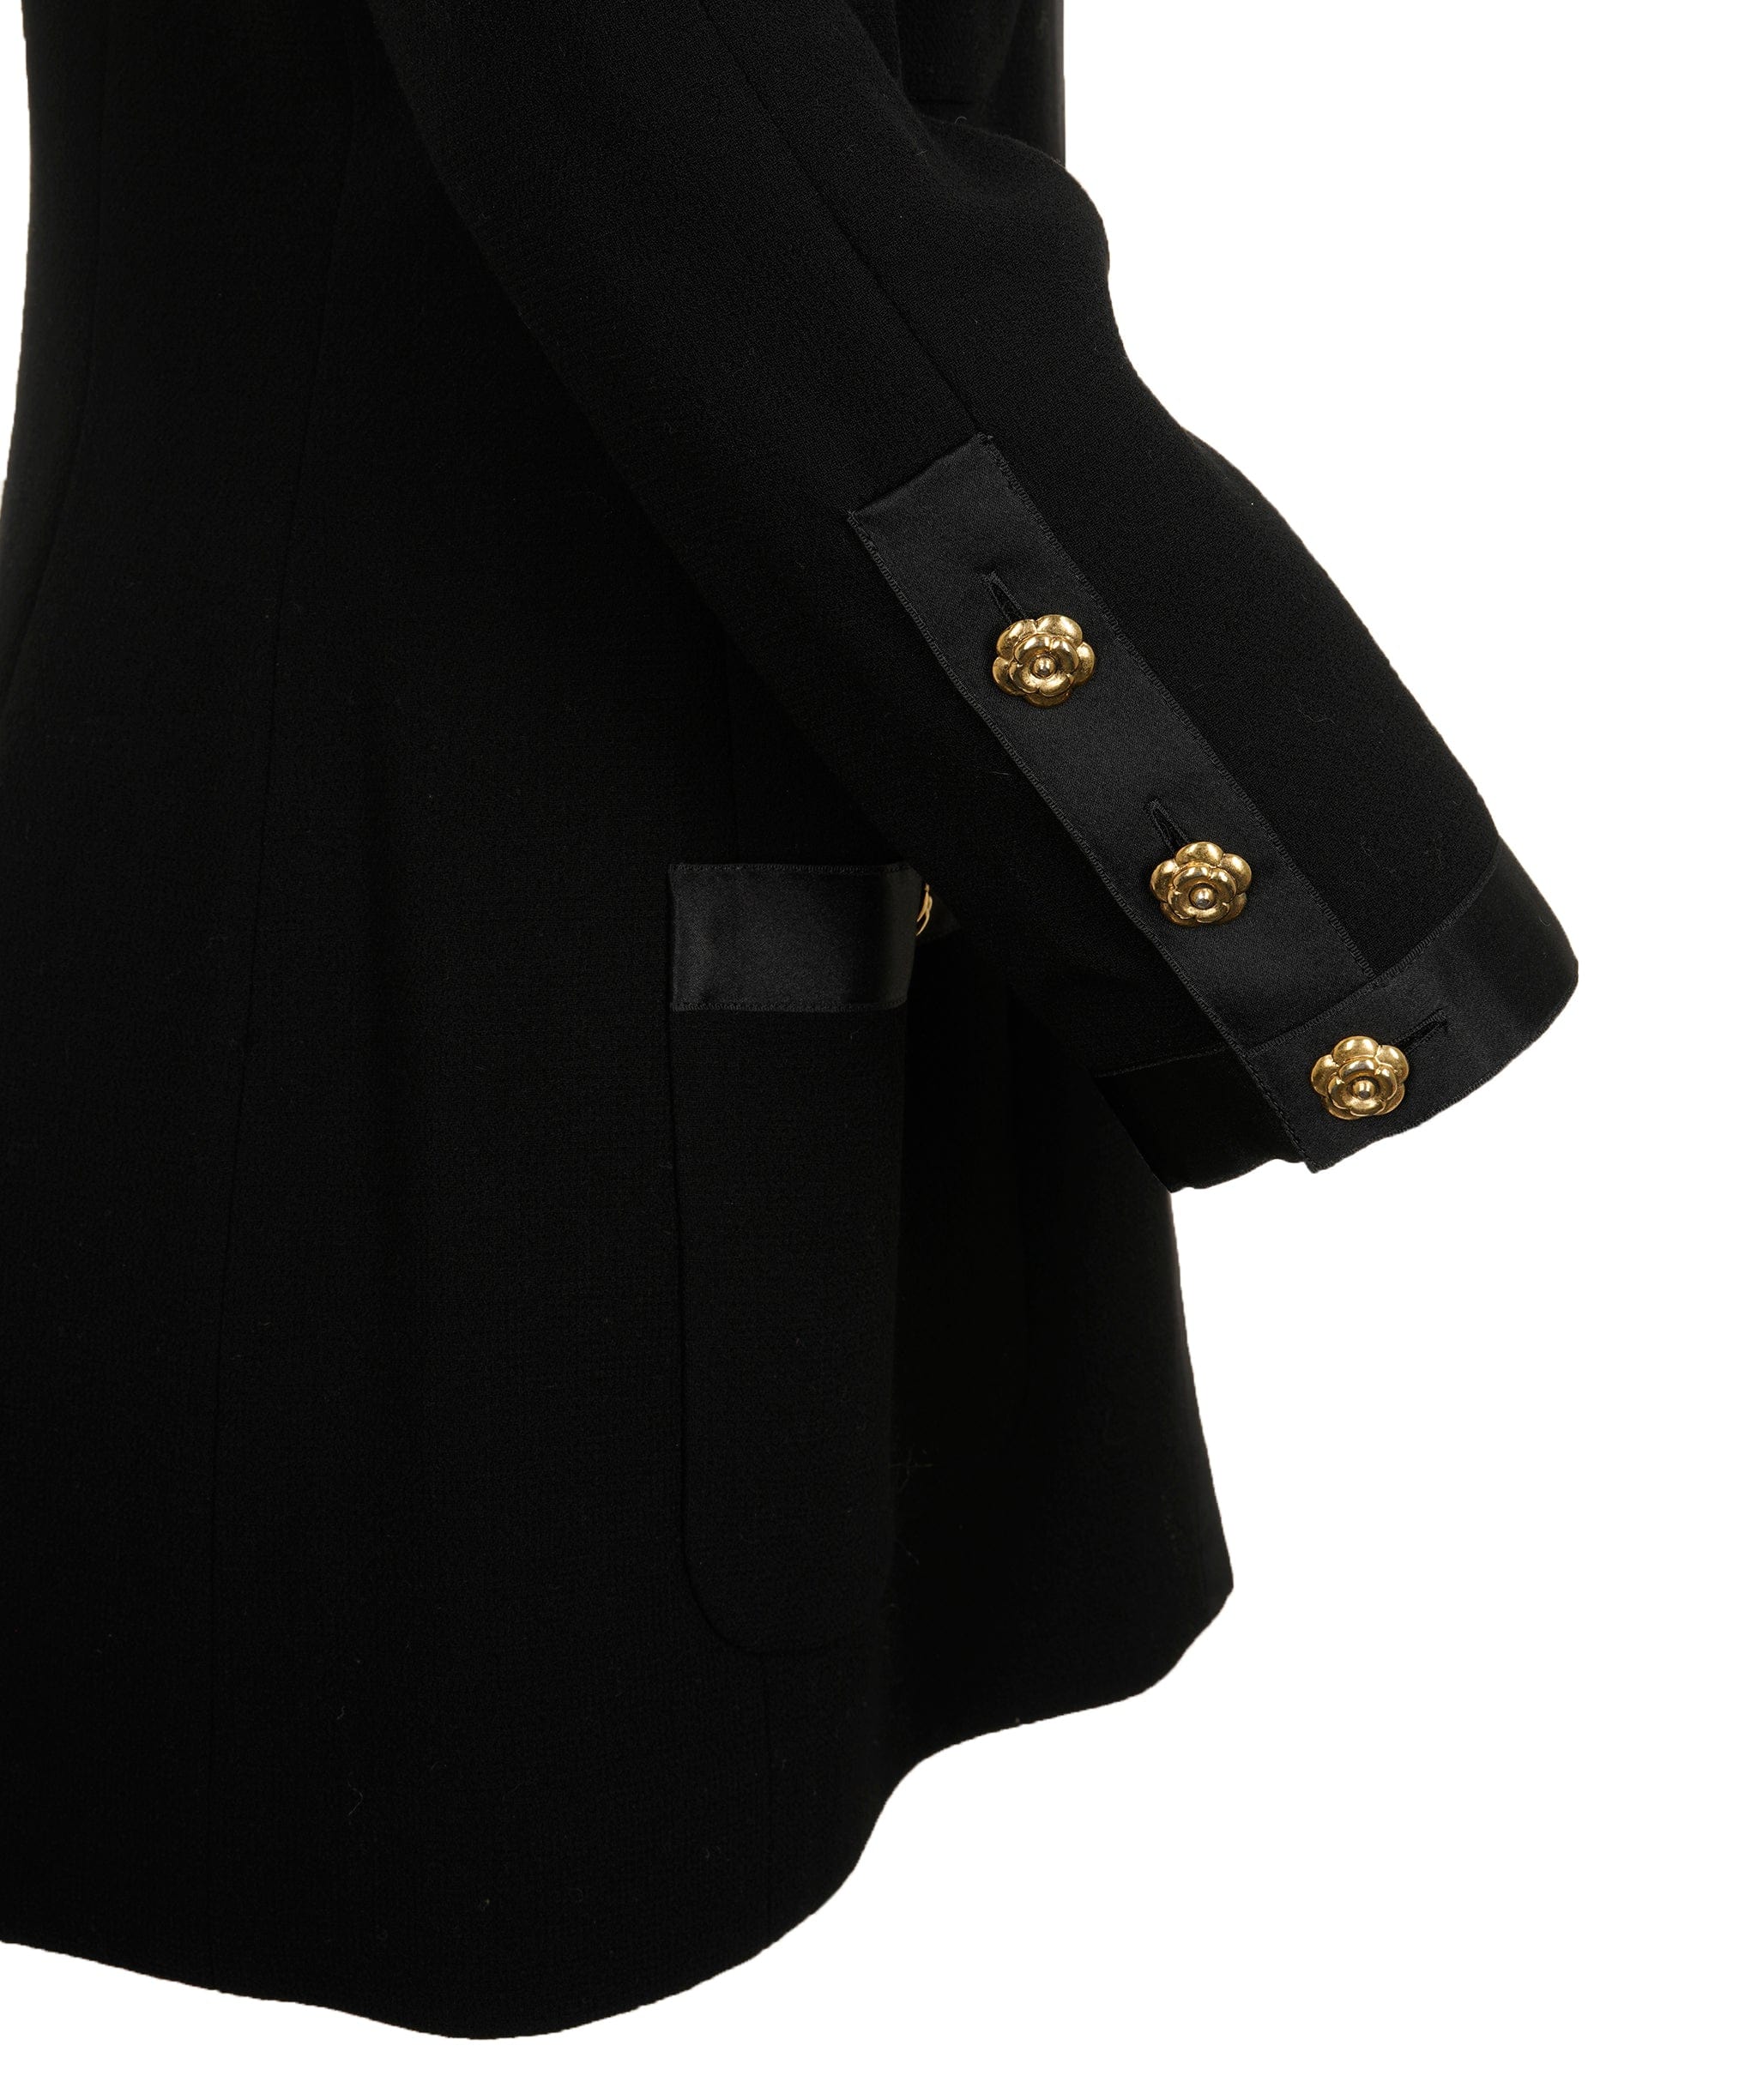 Chanel Chanel black tweed jacket size 44 - AJC0399